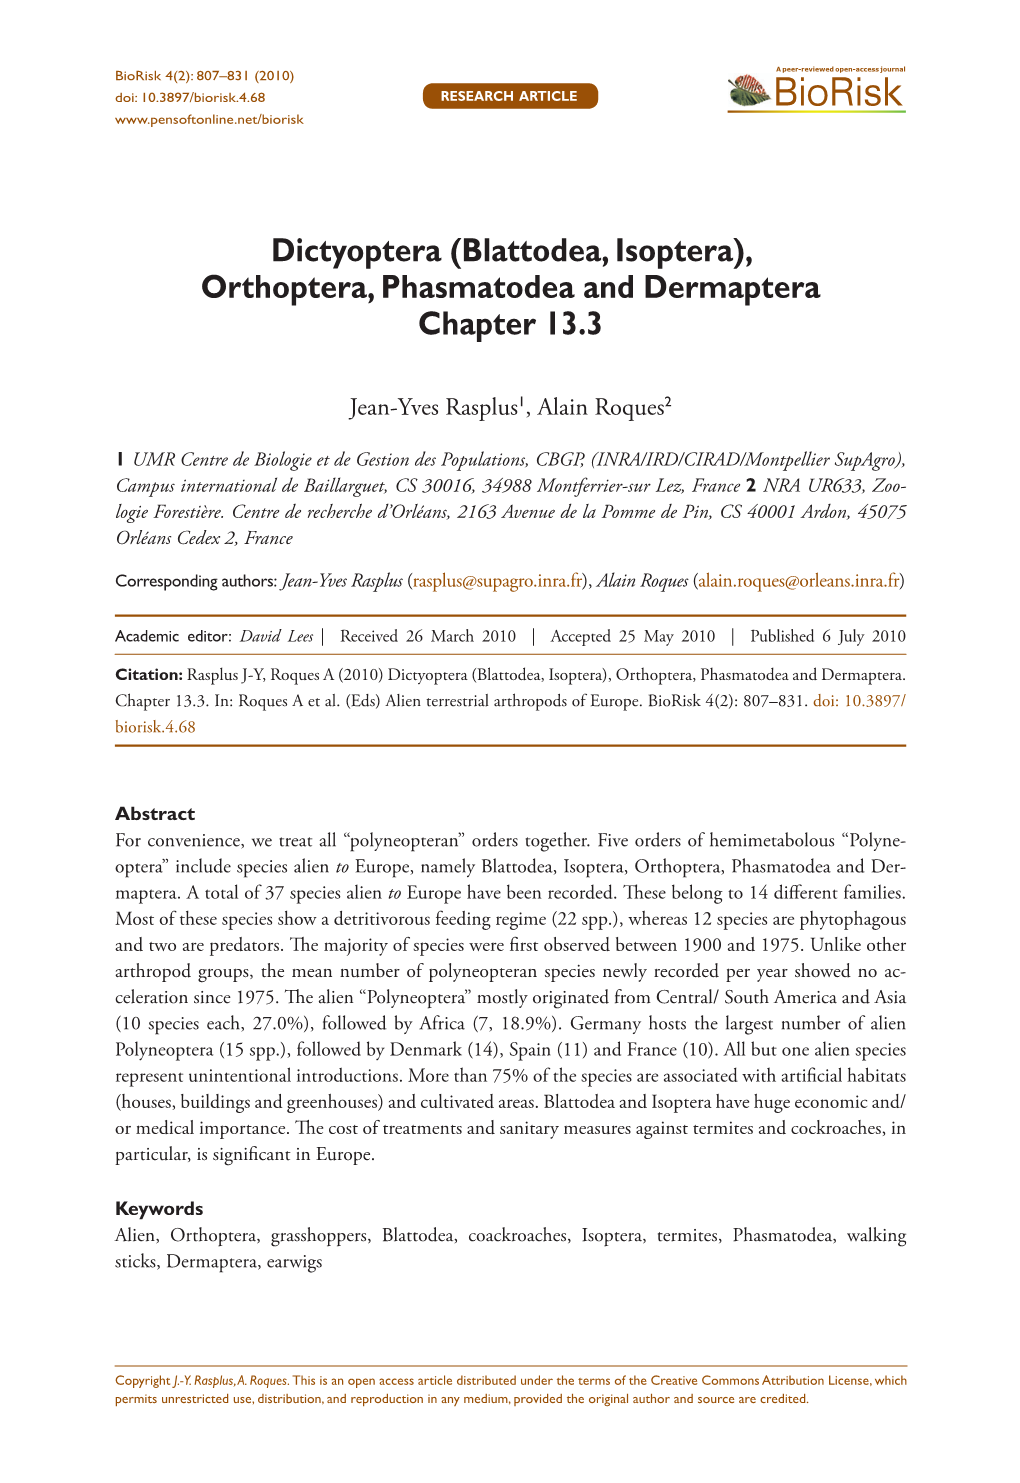 Dictyoptera (Blattodea, Isoptera), Orthoptera, Phasmatodea and Dermaptera Chapter 13.3